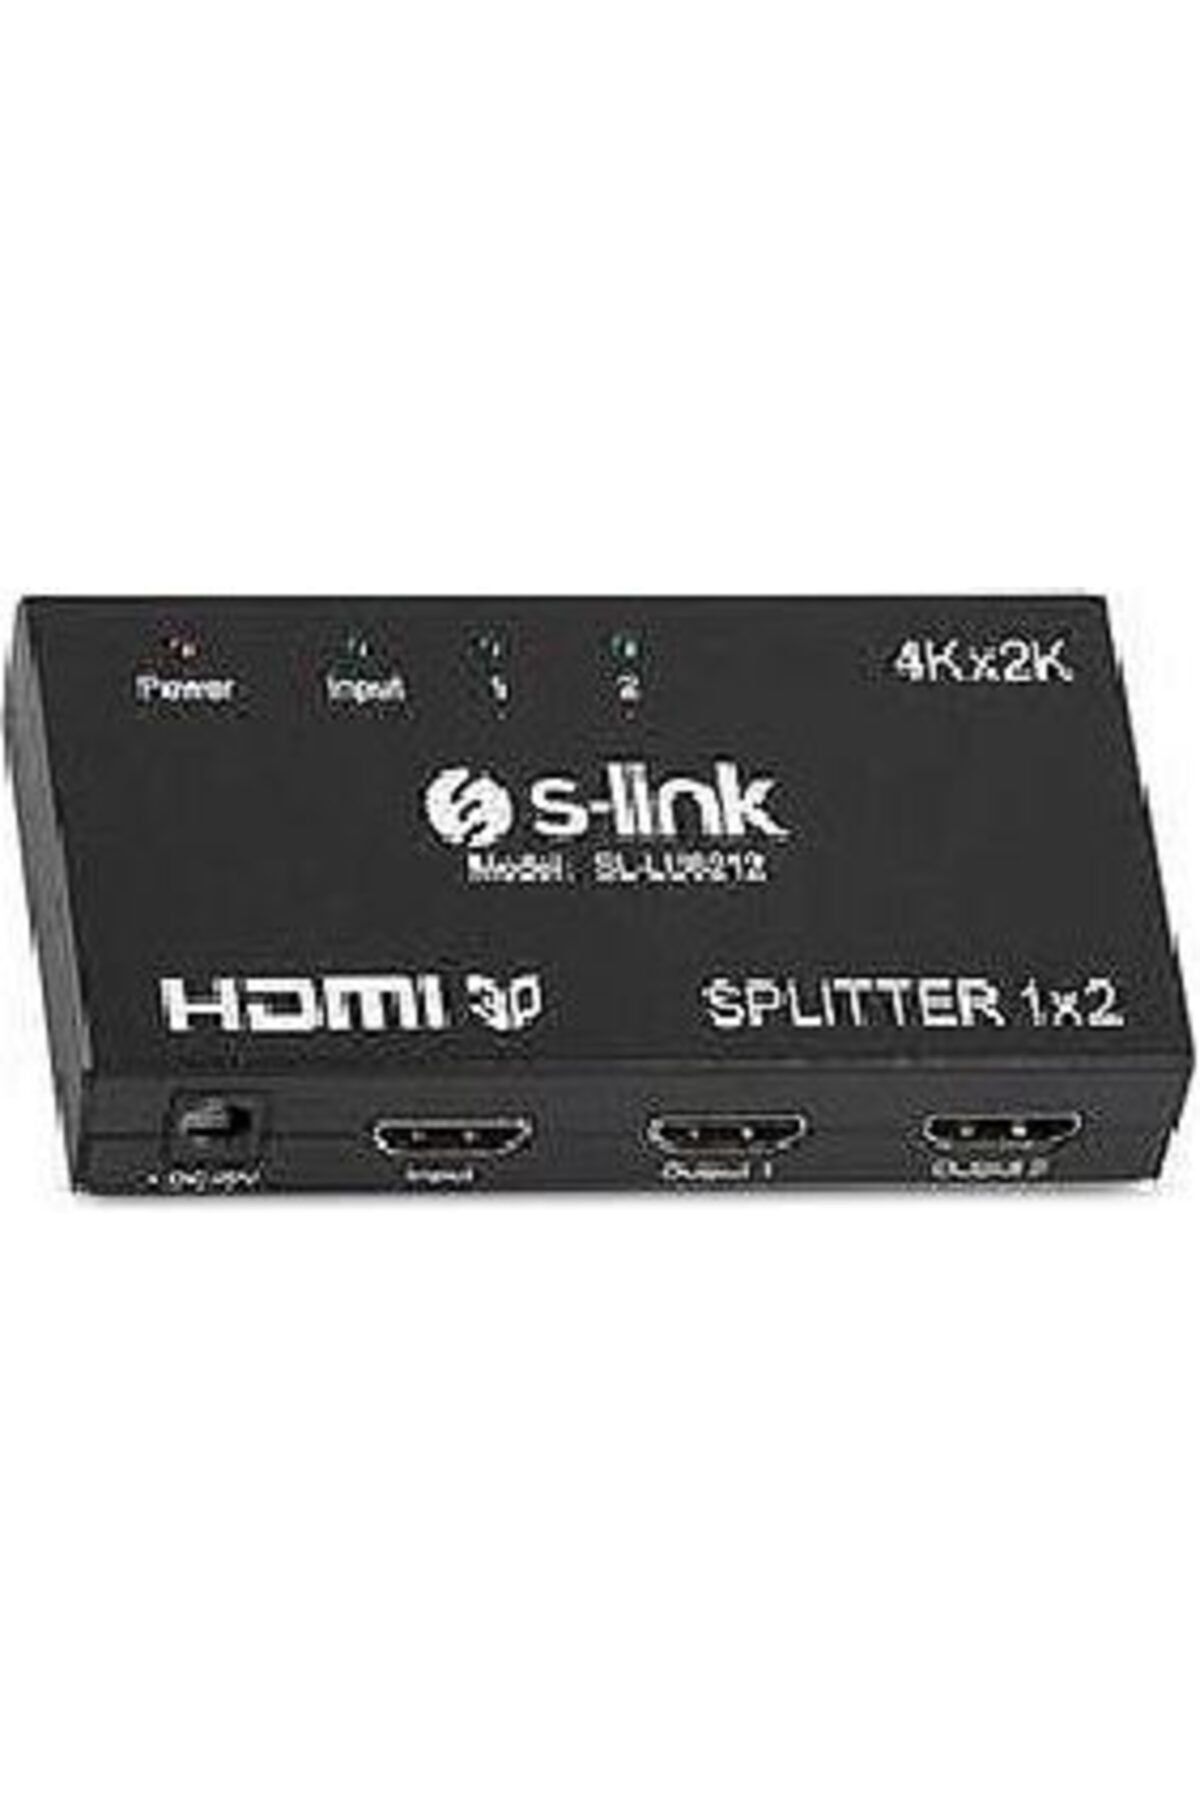 S-Link Sl-lu6212 2 Port 4k*2k Hdmı Splitter